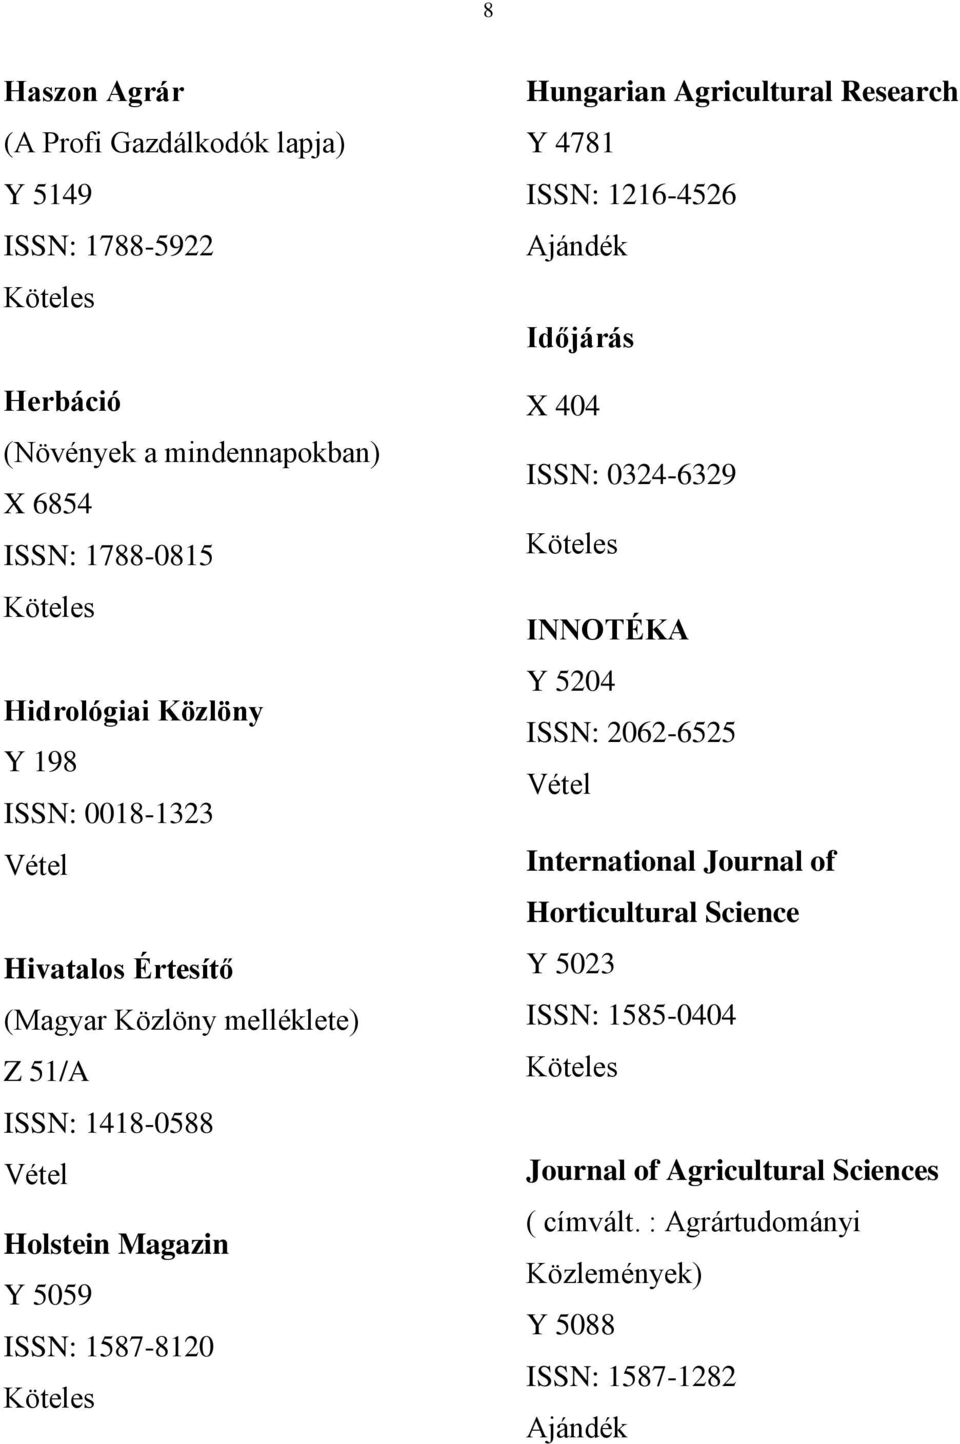 Hungarian Agricultural Research Y 4781 ISSN: 1216-4526 Időjárás X 404 ISSN: 0324-6329 INNOTÉKA Y 5204 ISSN: 2062-6525 International Journal